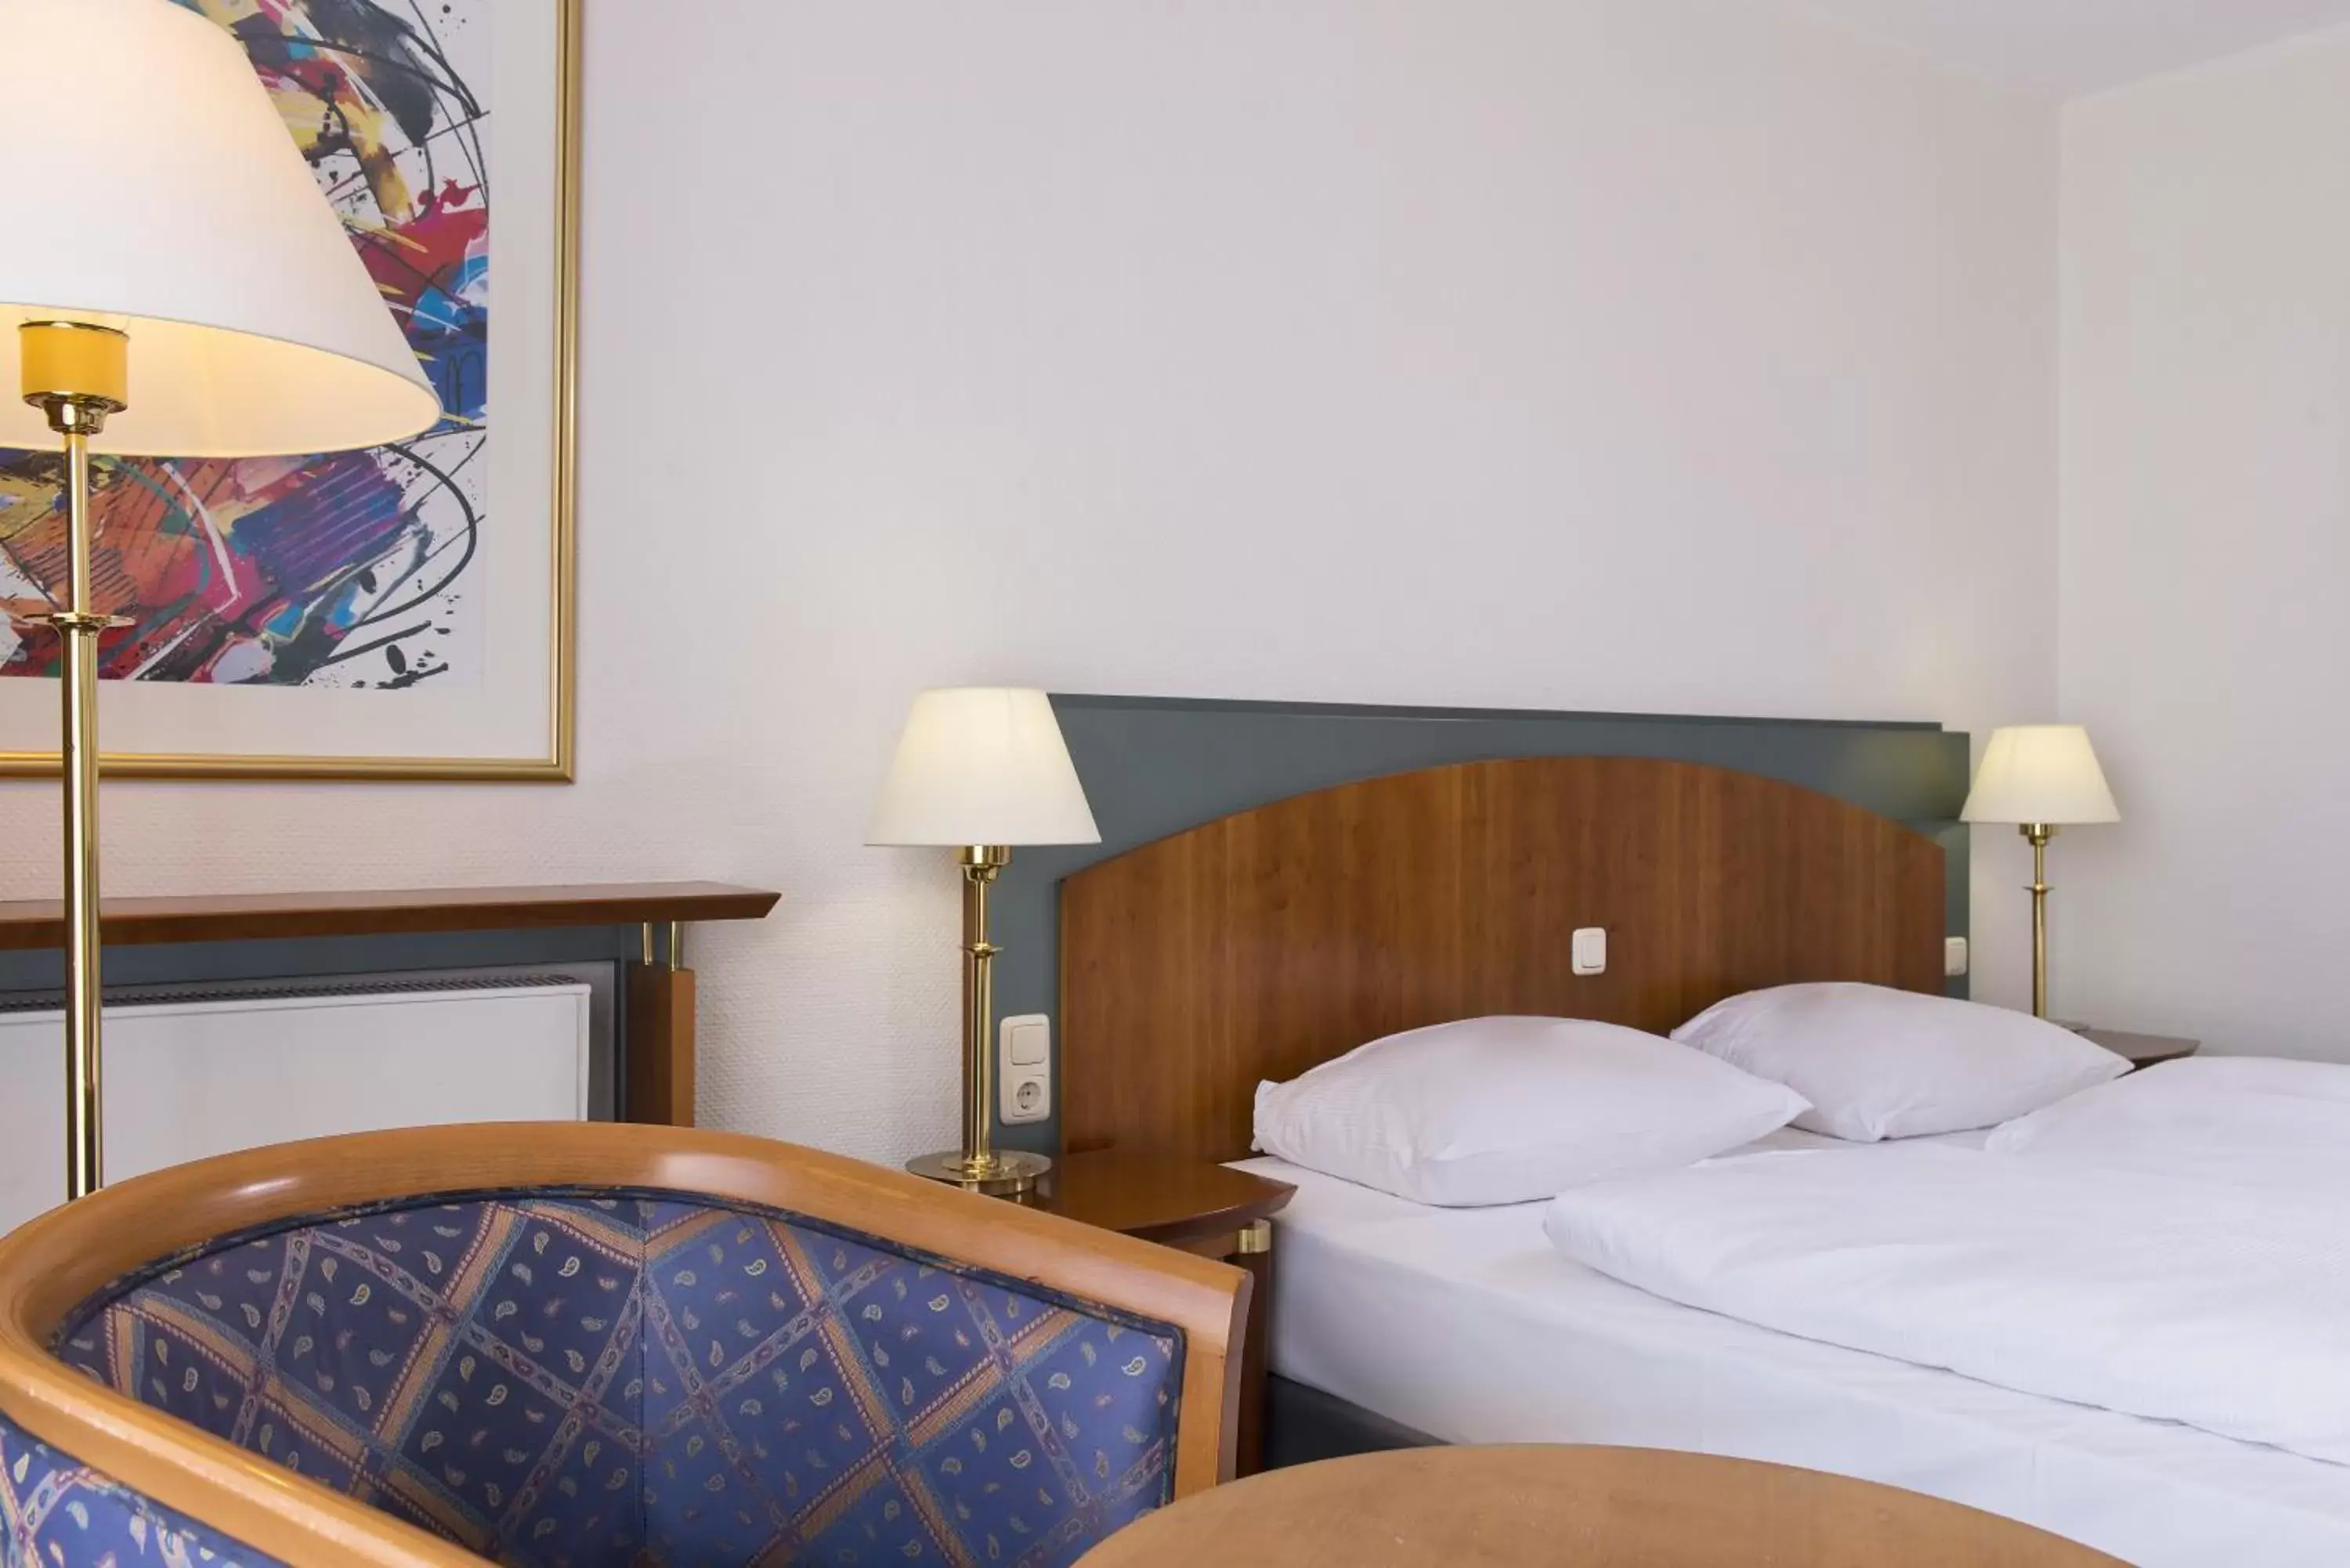 Bed, Room Photo in Congress Hotel Weimar by Mercure